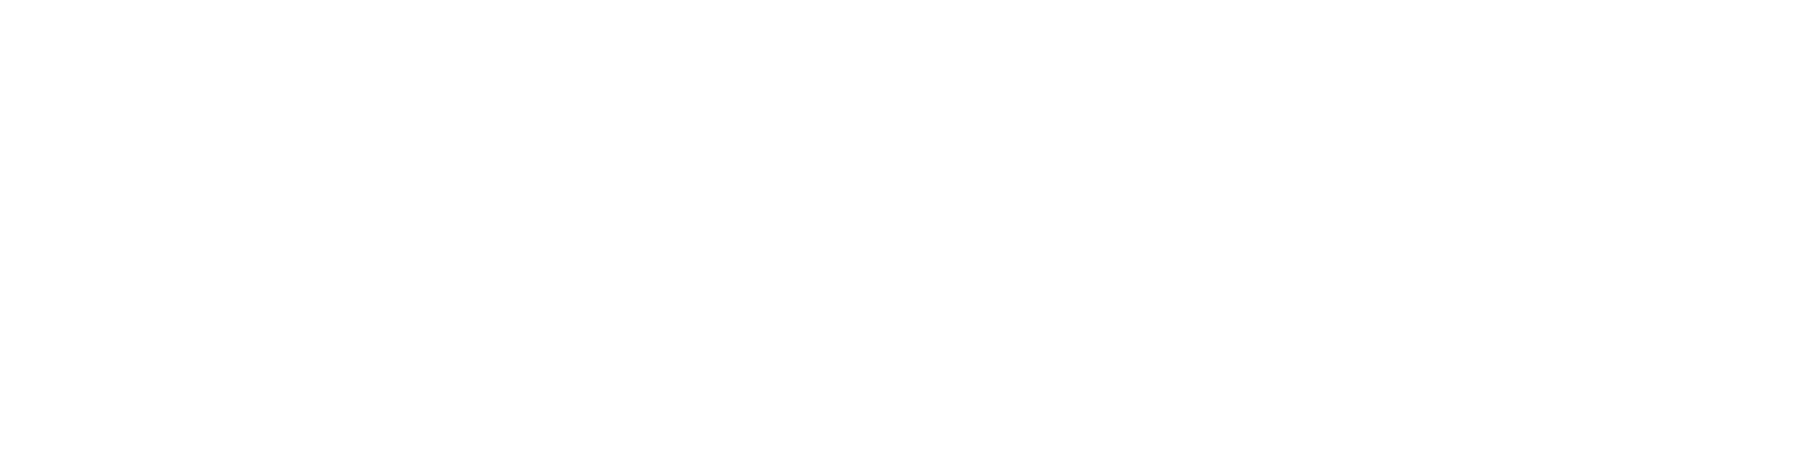 SkyTouch Technology